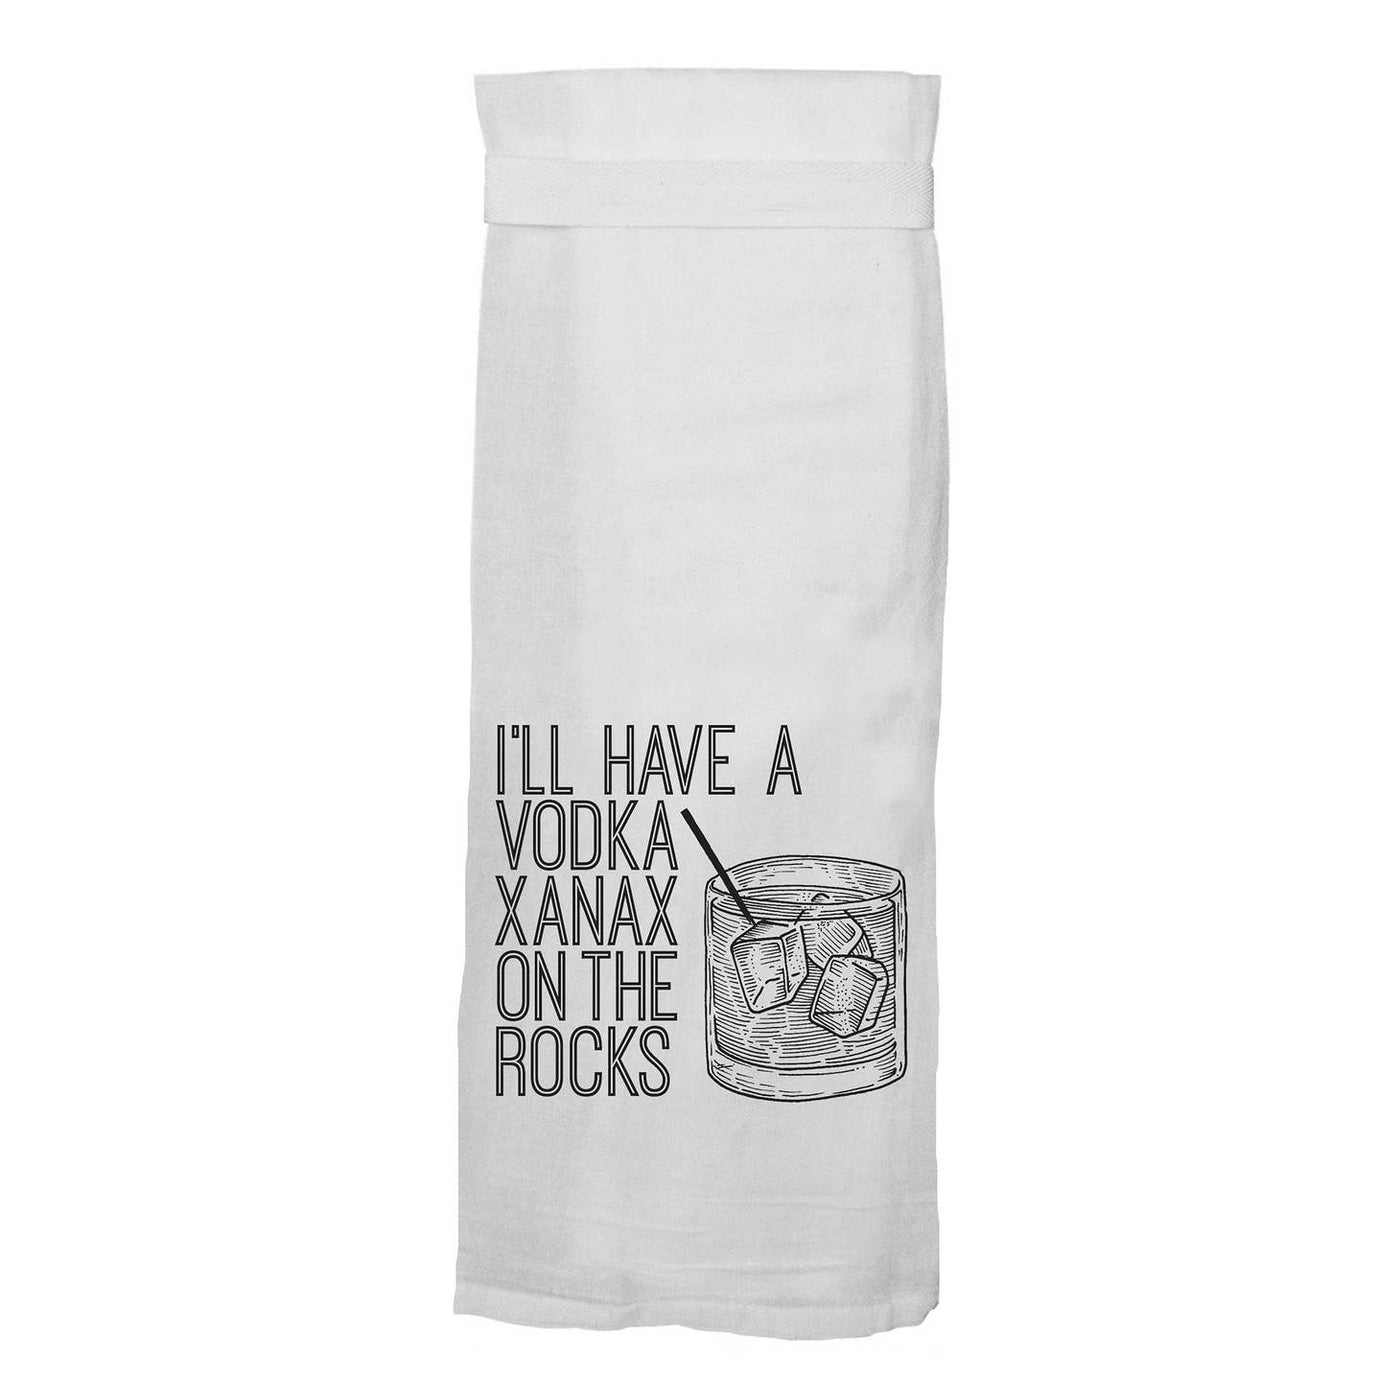 I'll Have A Vodka Xanax On The Rocks Flour Sack Kitchen Towel